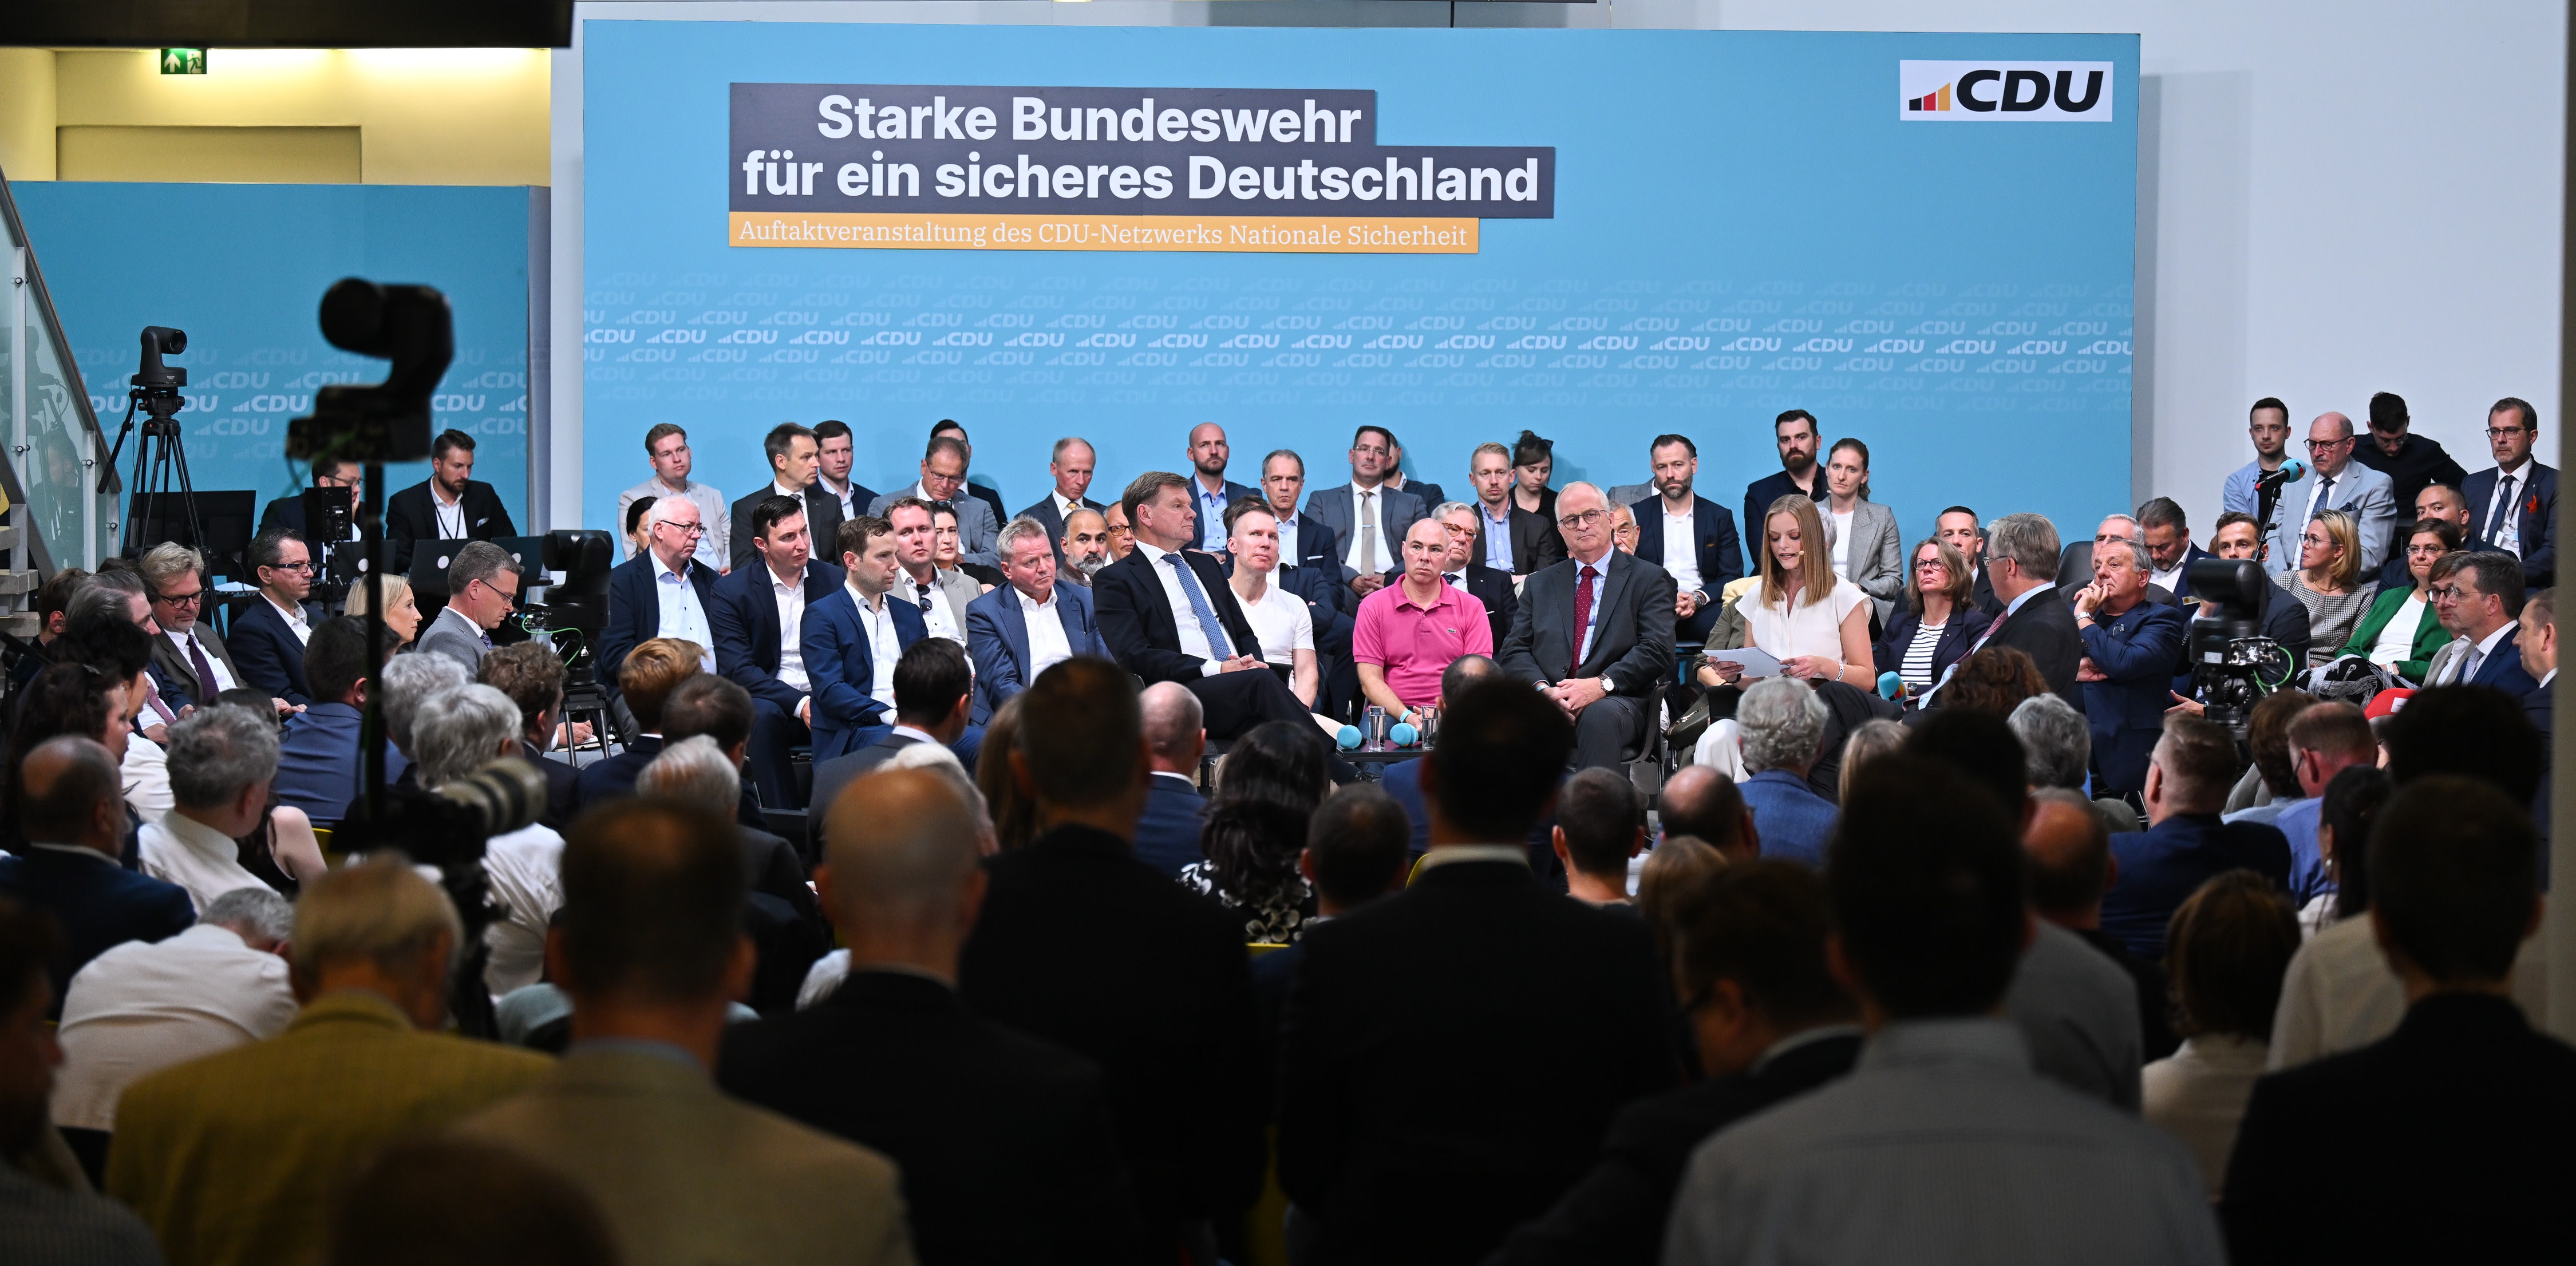 Foto: CDU Deutschlands/ Nils Hasenau